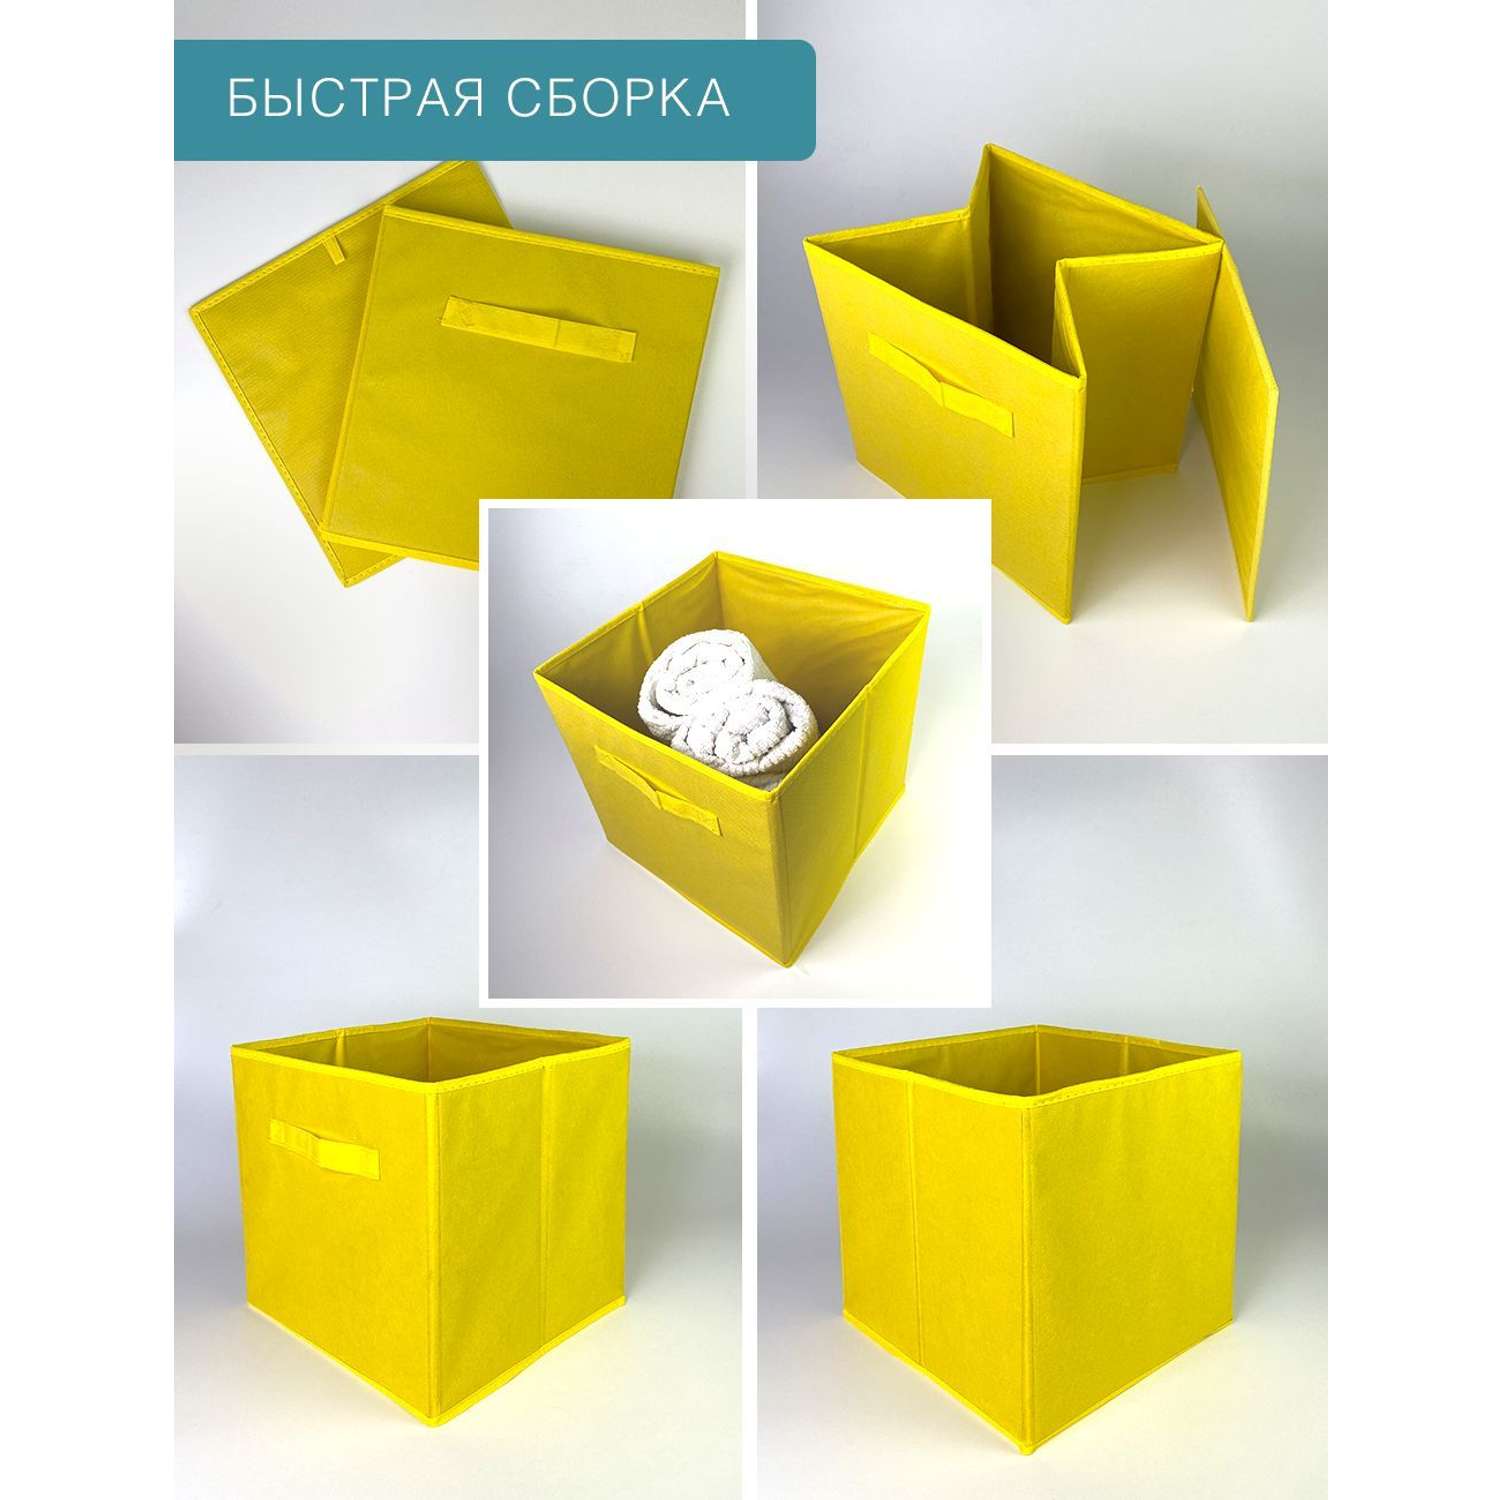 Короб-кубик ГЕЛЕОС для хранения вещей КУБ 33-6 30х30х30см желтый - фото 4